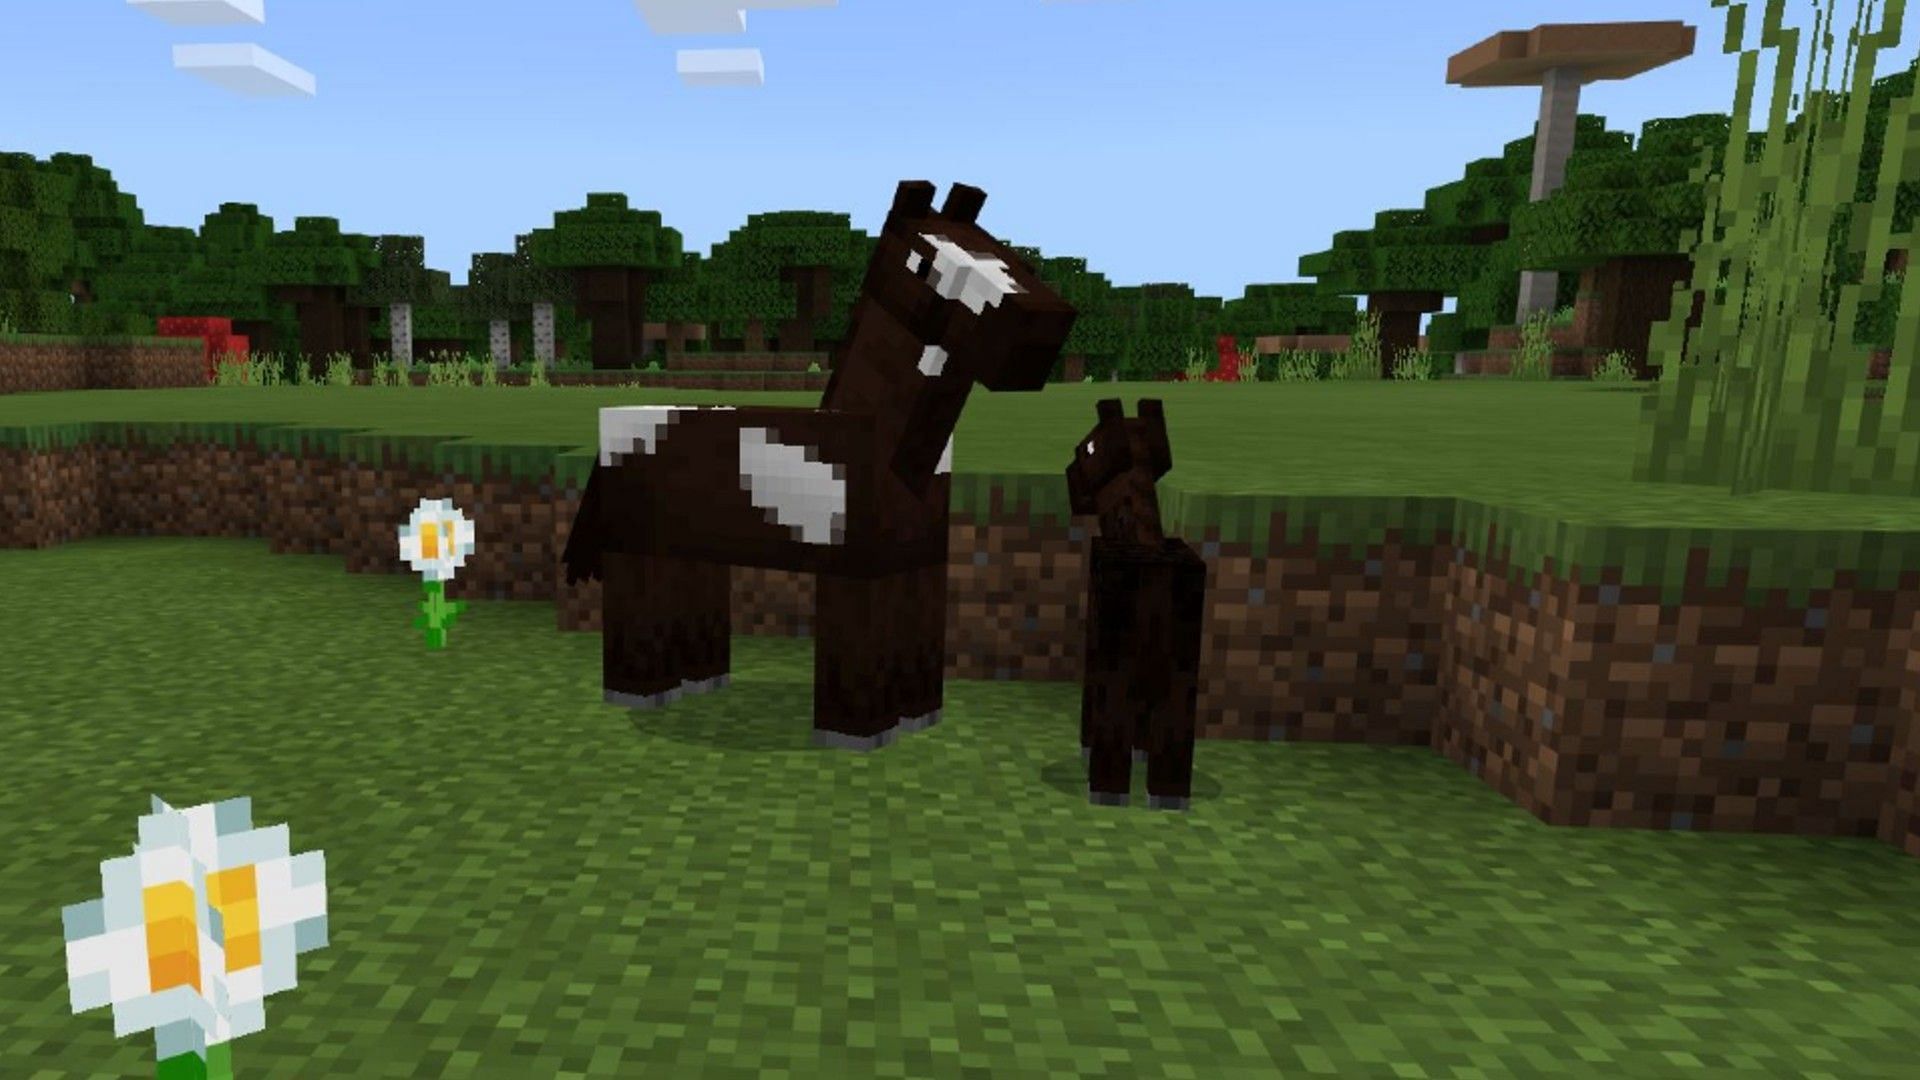 Horse &amp; Baby horse (Image via Minecraft)